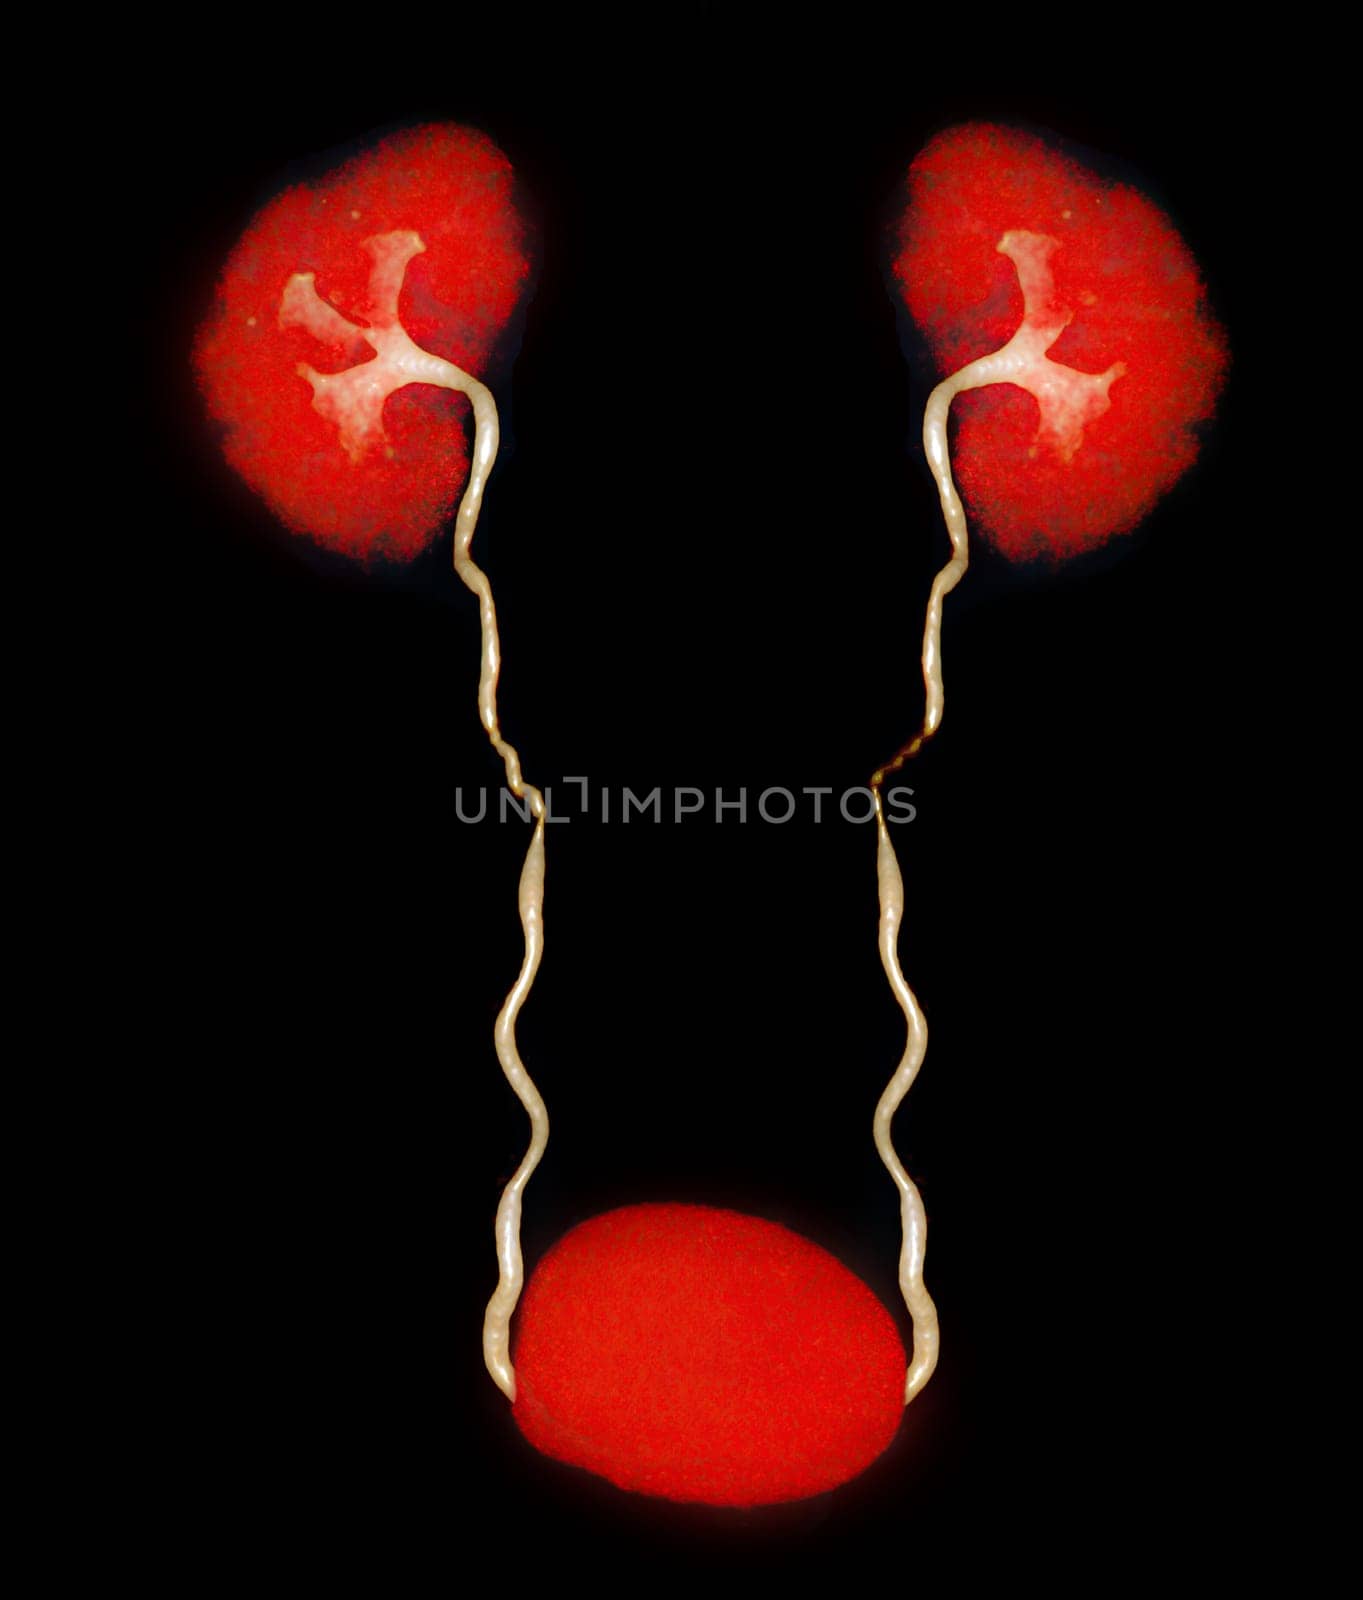 CTA Renal artery  3D rendering image  showing both kidney, Ureter and bladder . by samunella